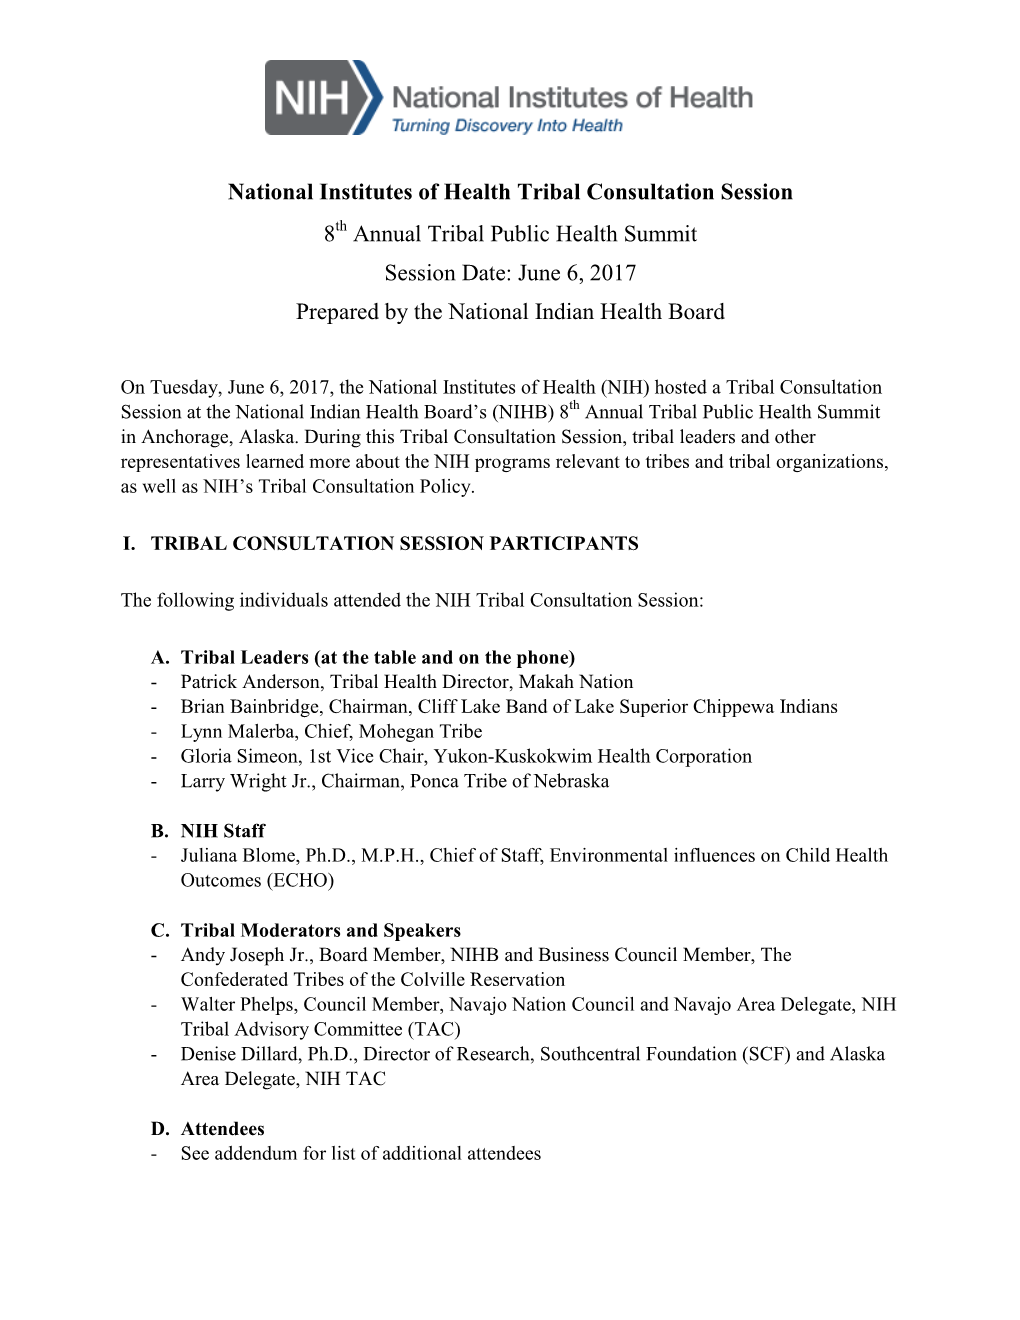 NIH Tribal Consultation Session